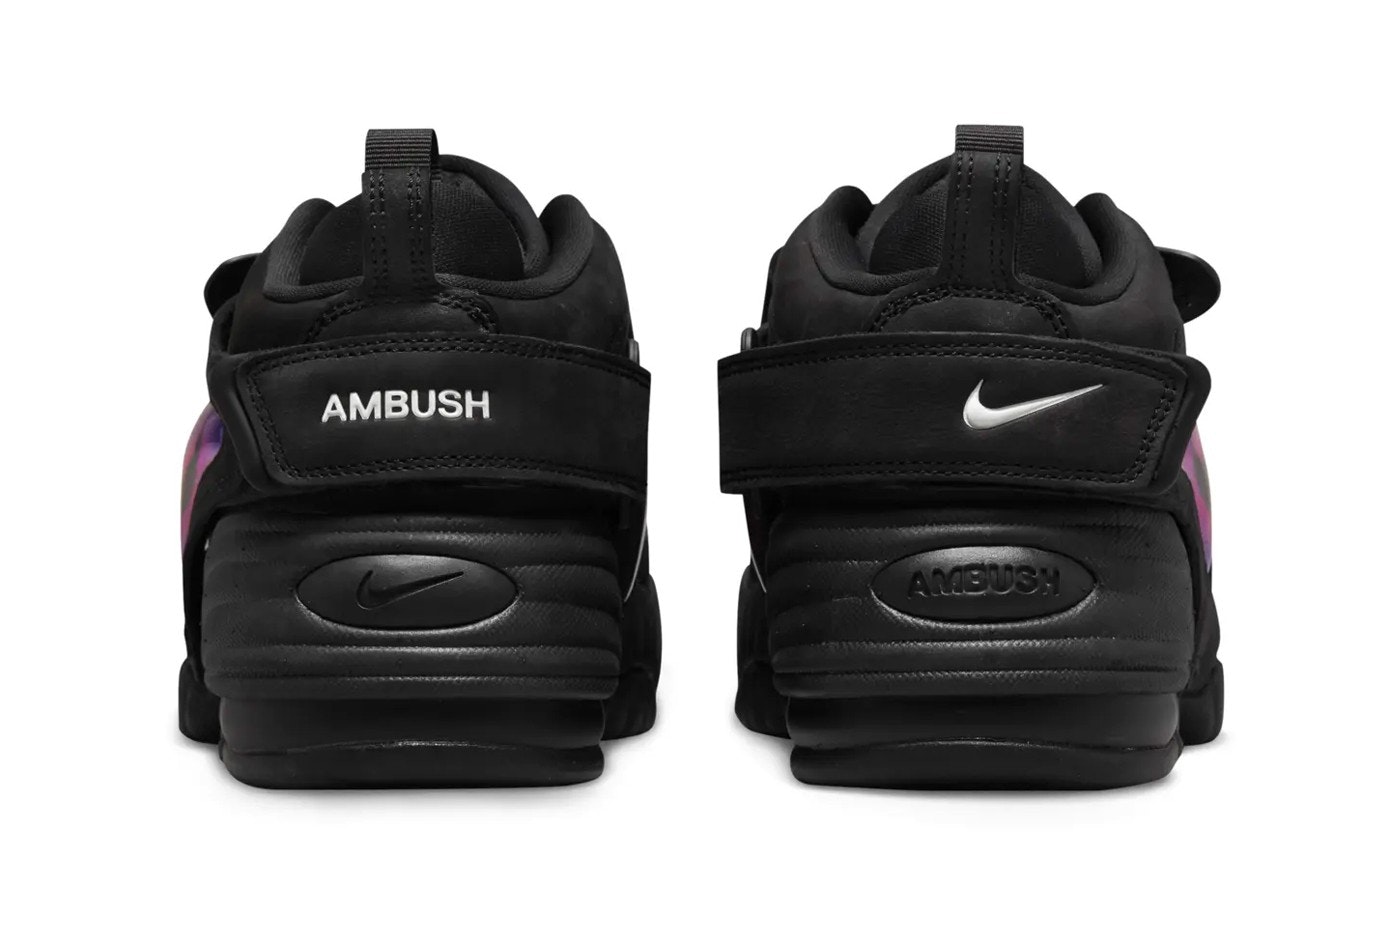 AMBUSH x Nike Air Adjust Force "Black"